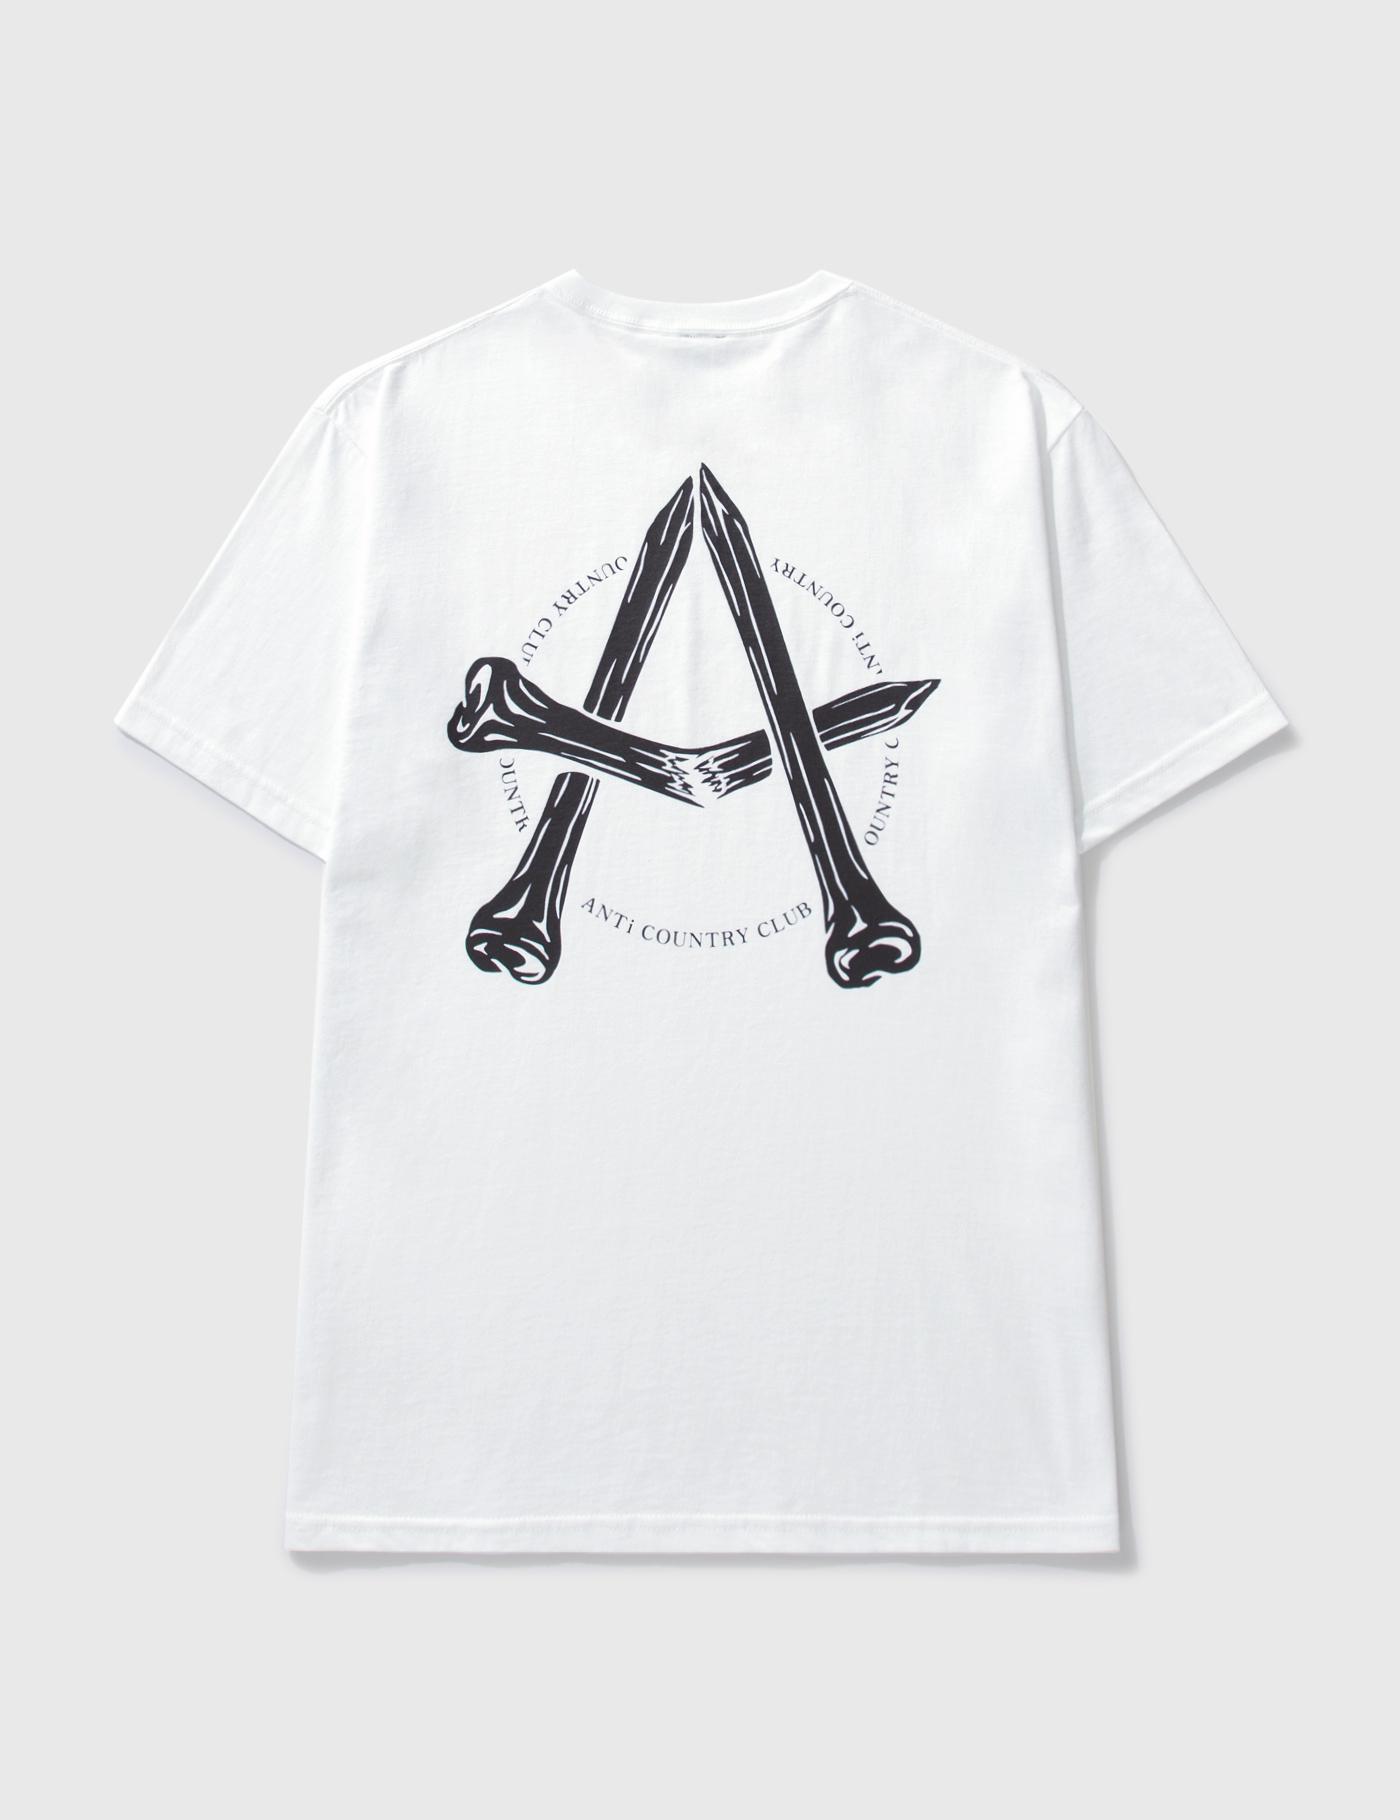 Tokyo Anarchy Logo T-shirt by ANTI COUNTRY CLUB TOKYO